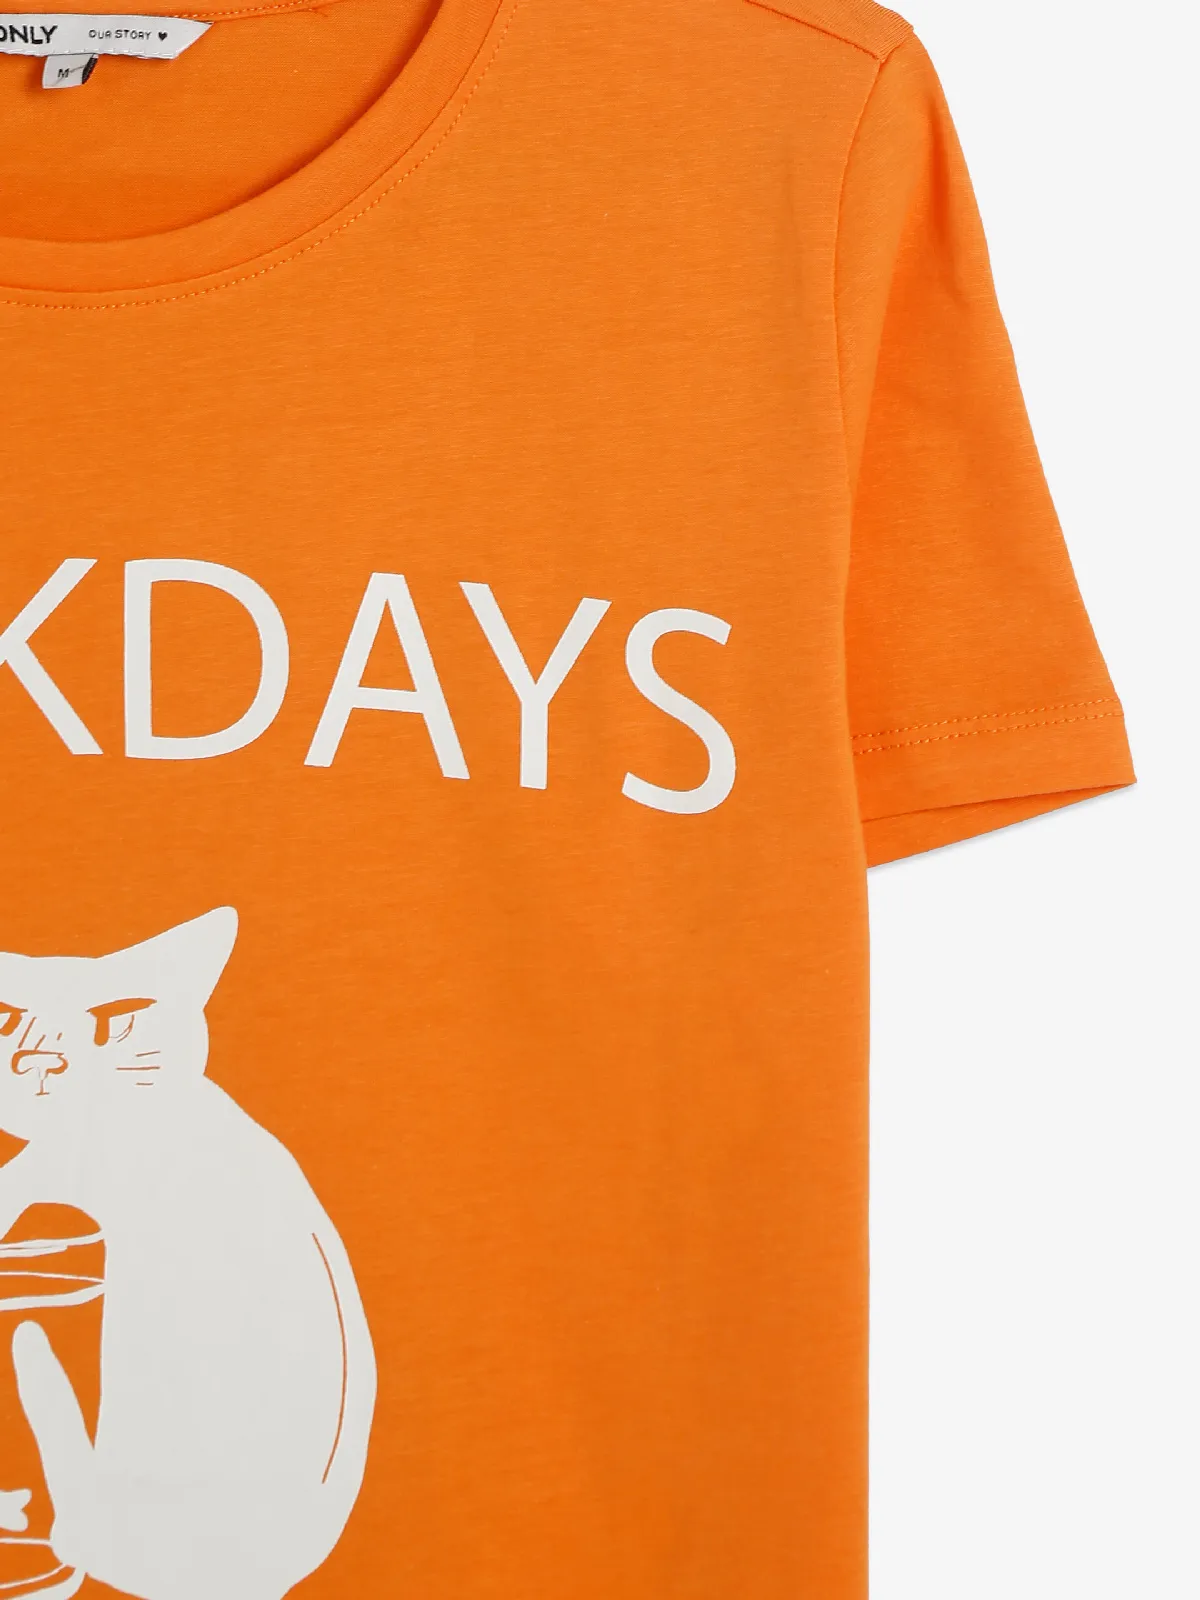 ONLY cotton printed orange t-shirt